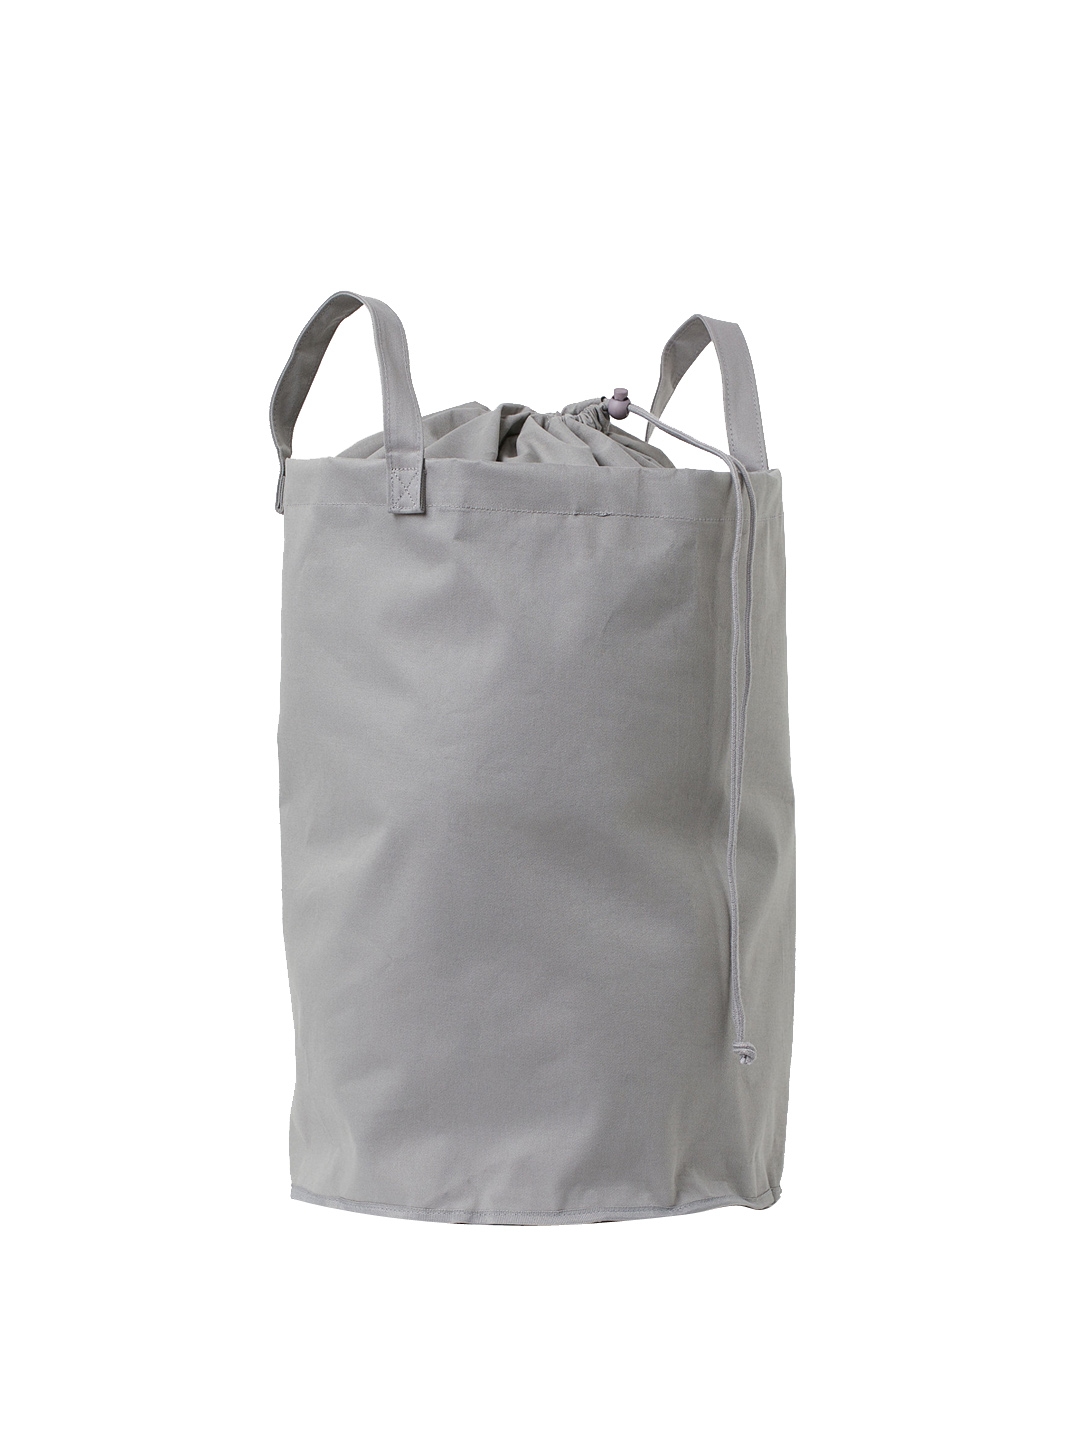 H&M Grey Cotton Twill Laundry Bag